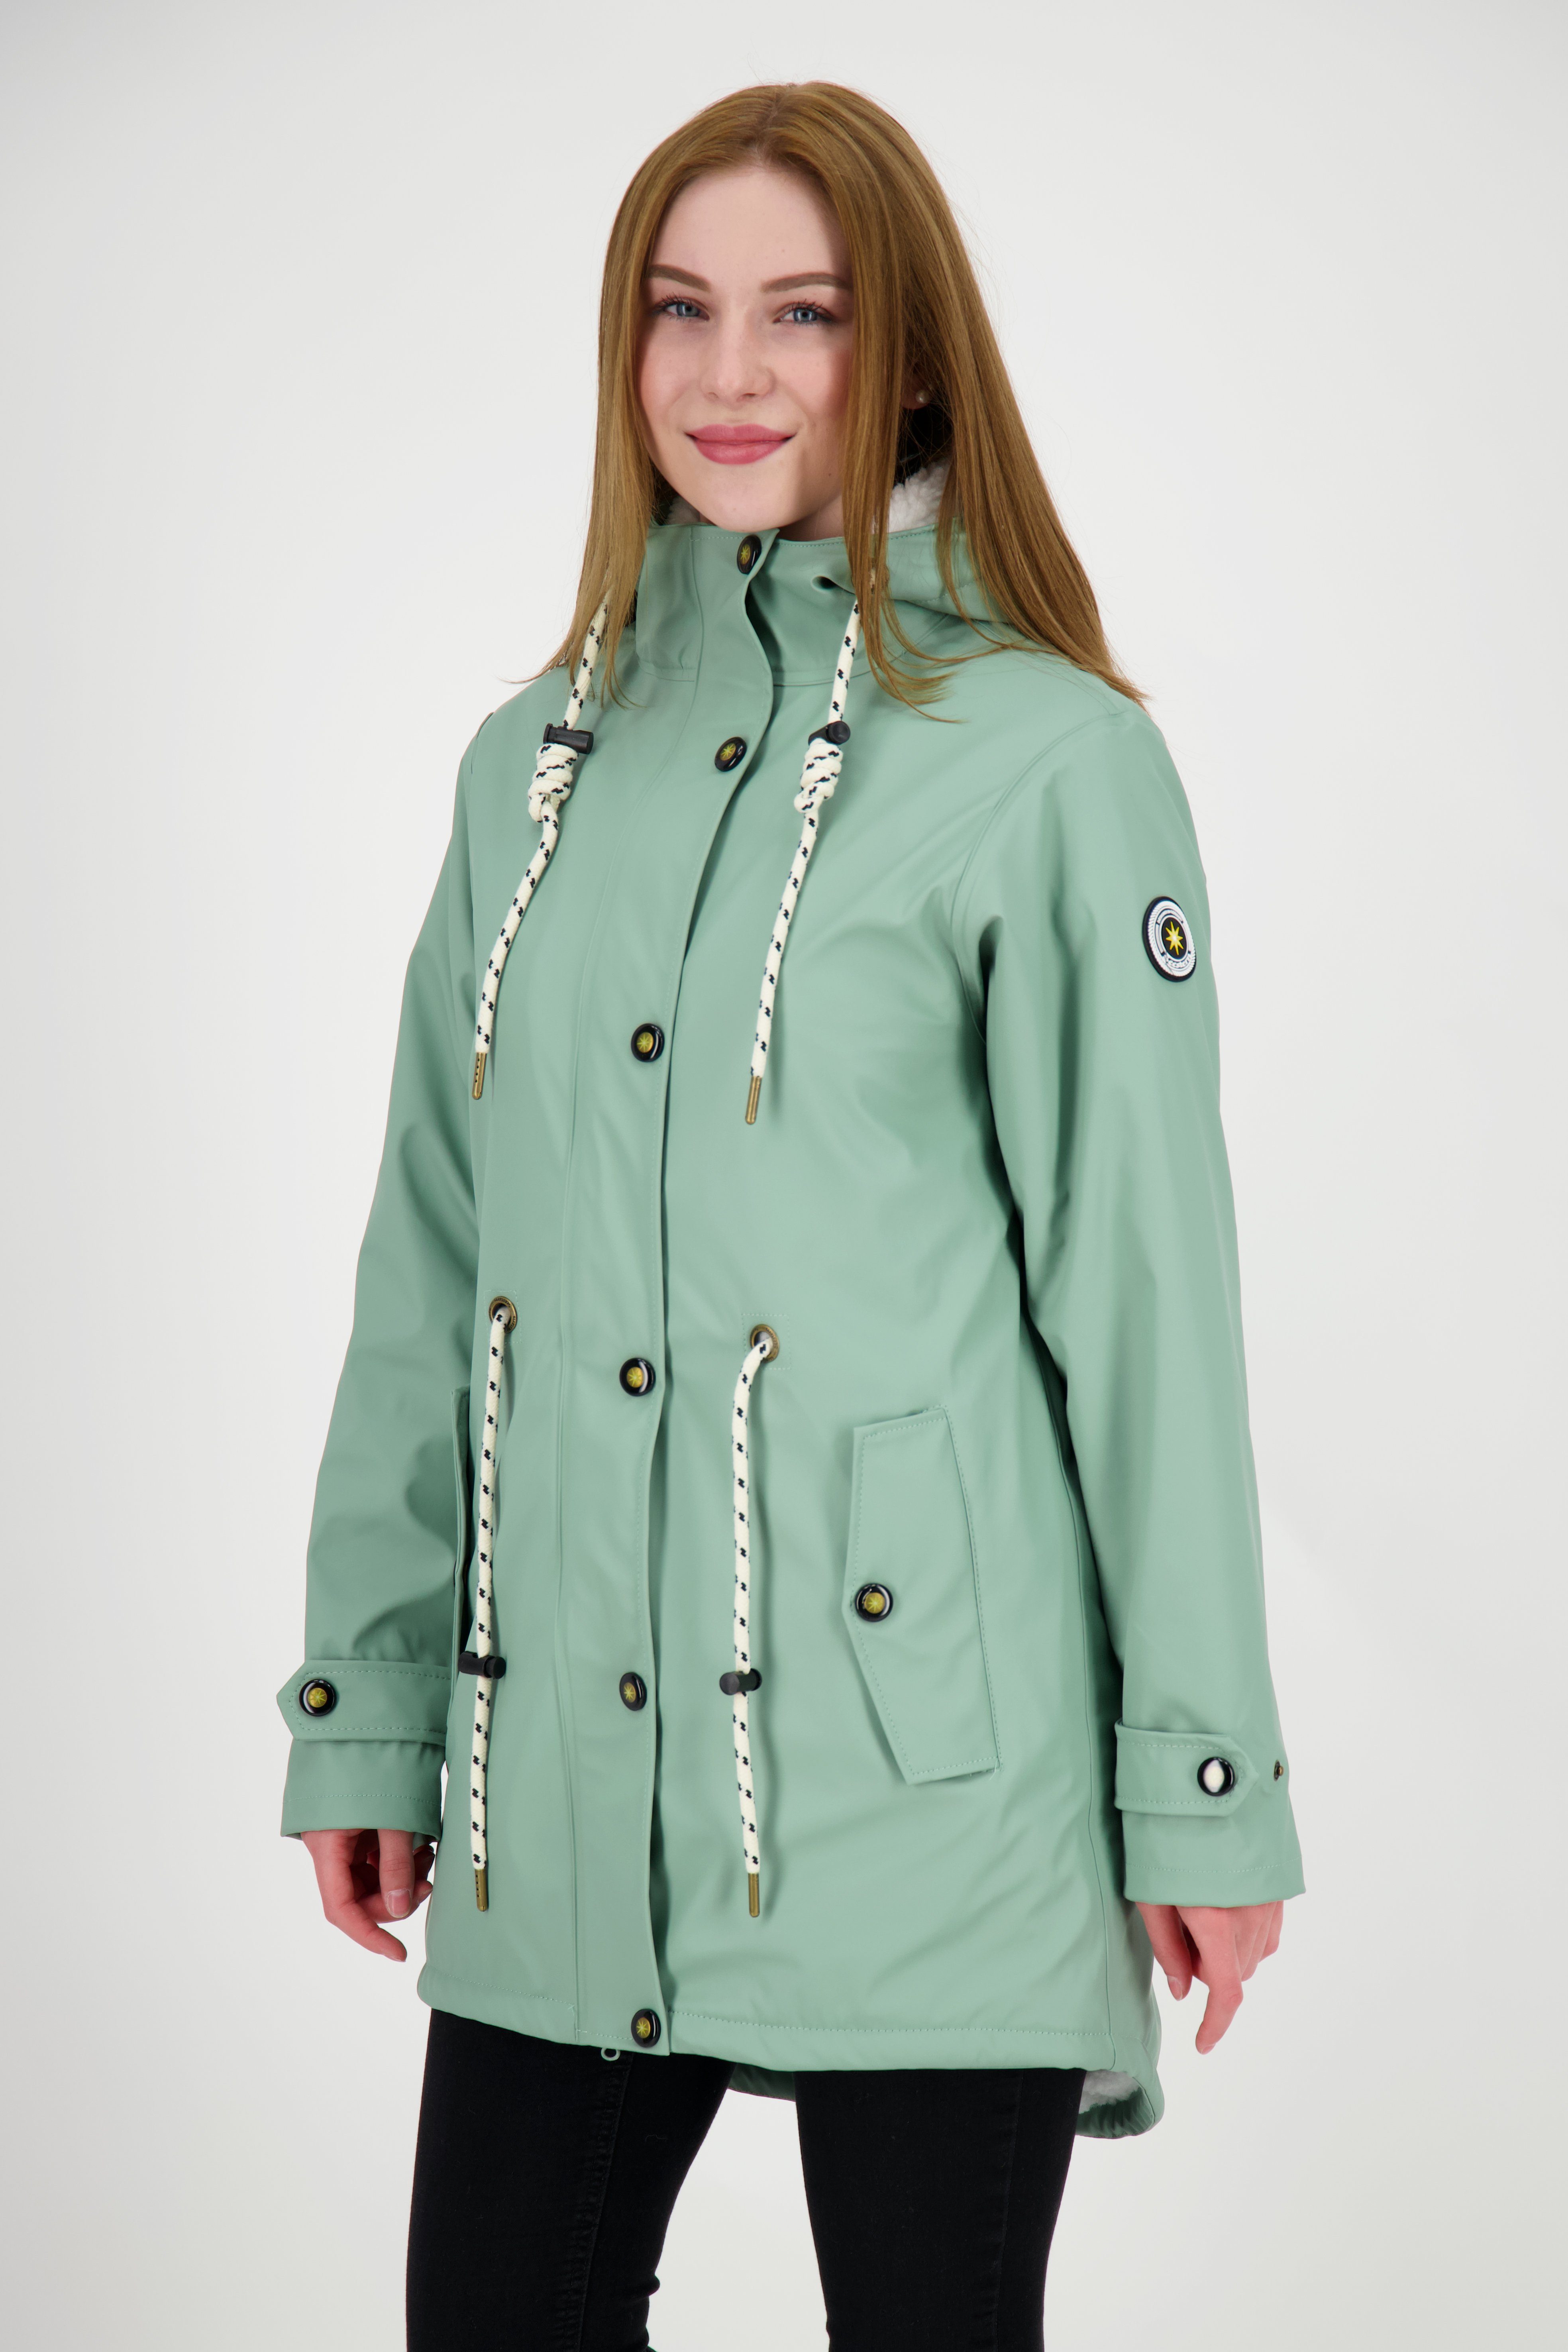 WOMEN auch & DEPROC Regenjacke Größen CS Longjacket in #ankergluttraum Regenjacke NEW Active erhältlich ANKERGLUT Großen